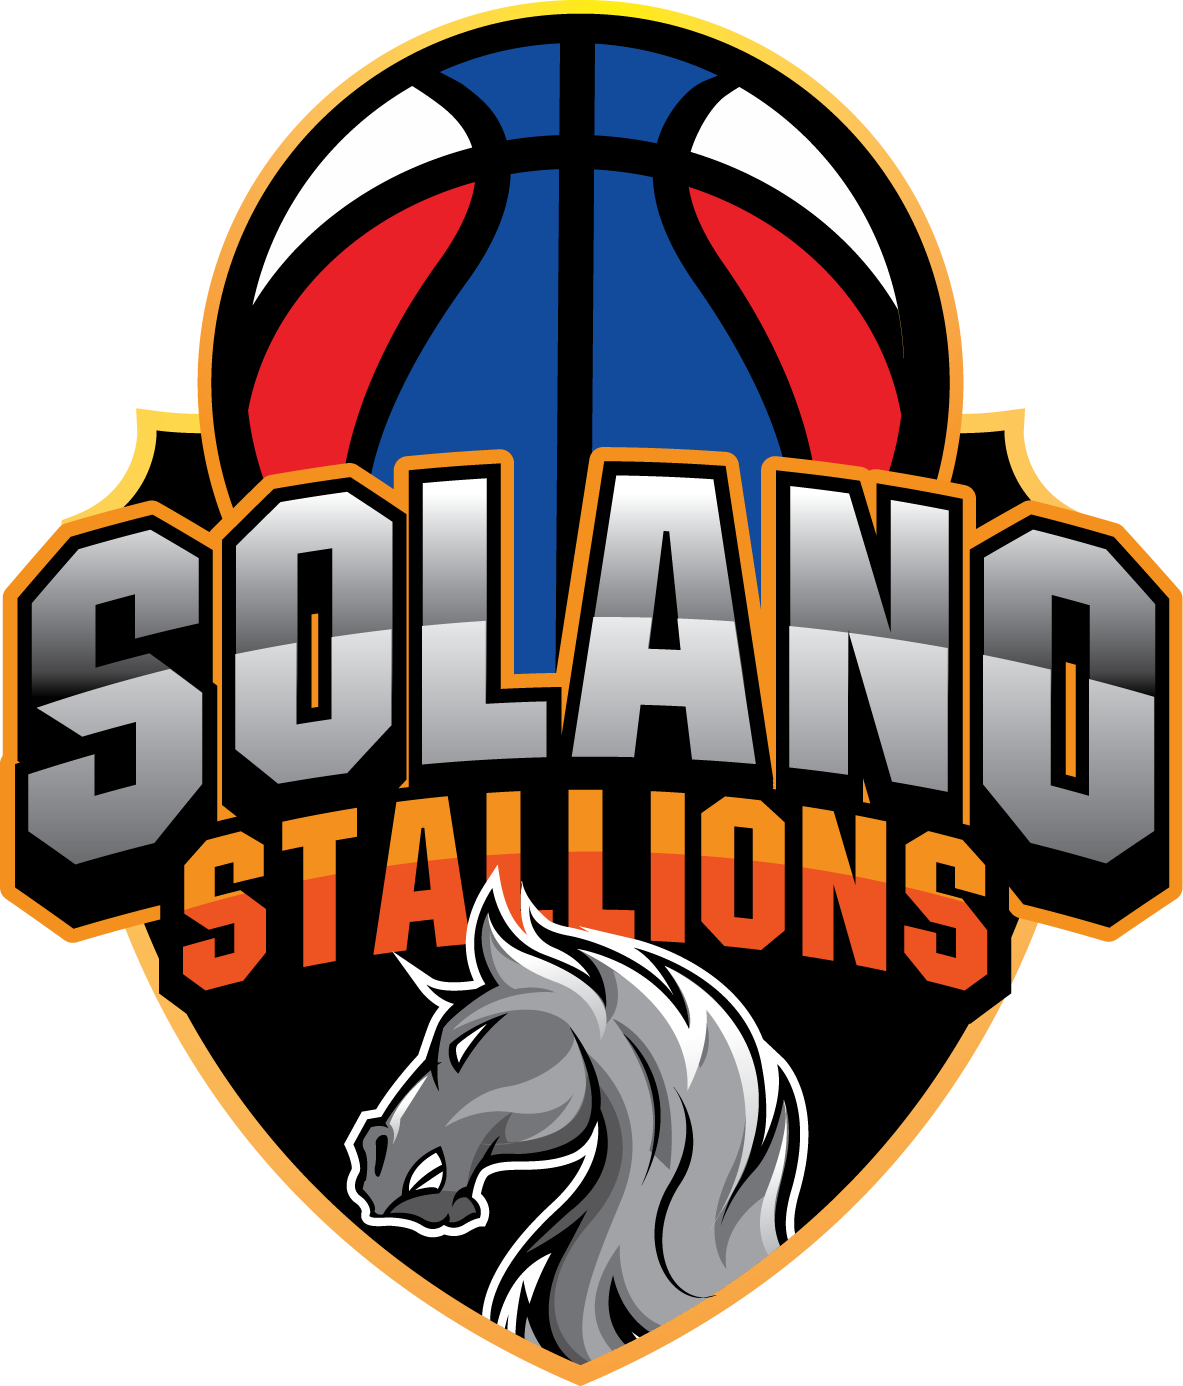 Solano Stallions ABA Pro Basketball Team Store